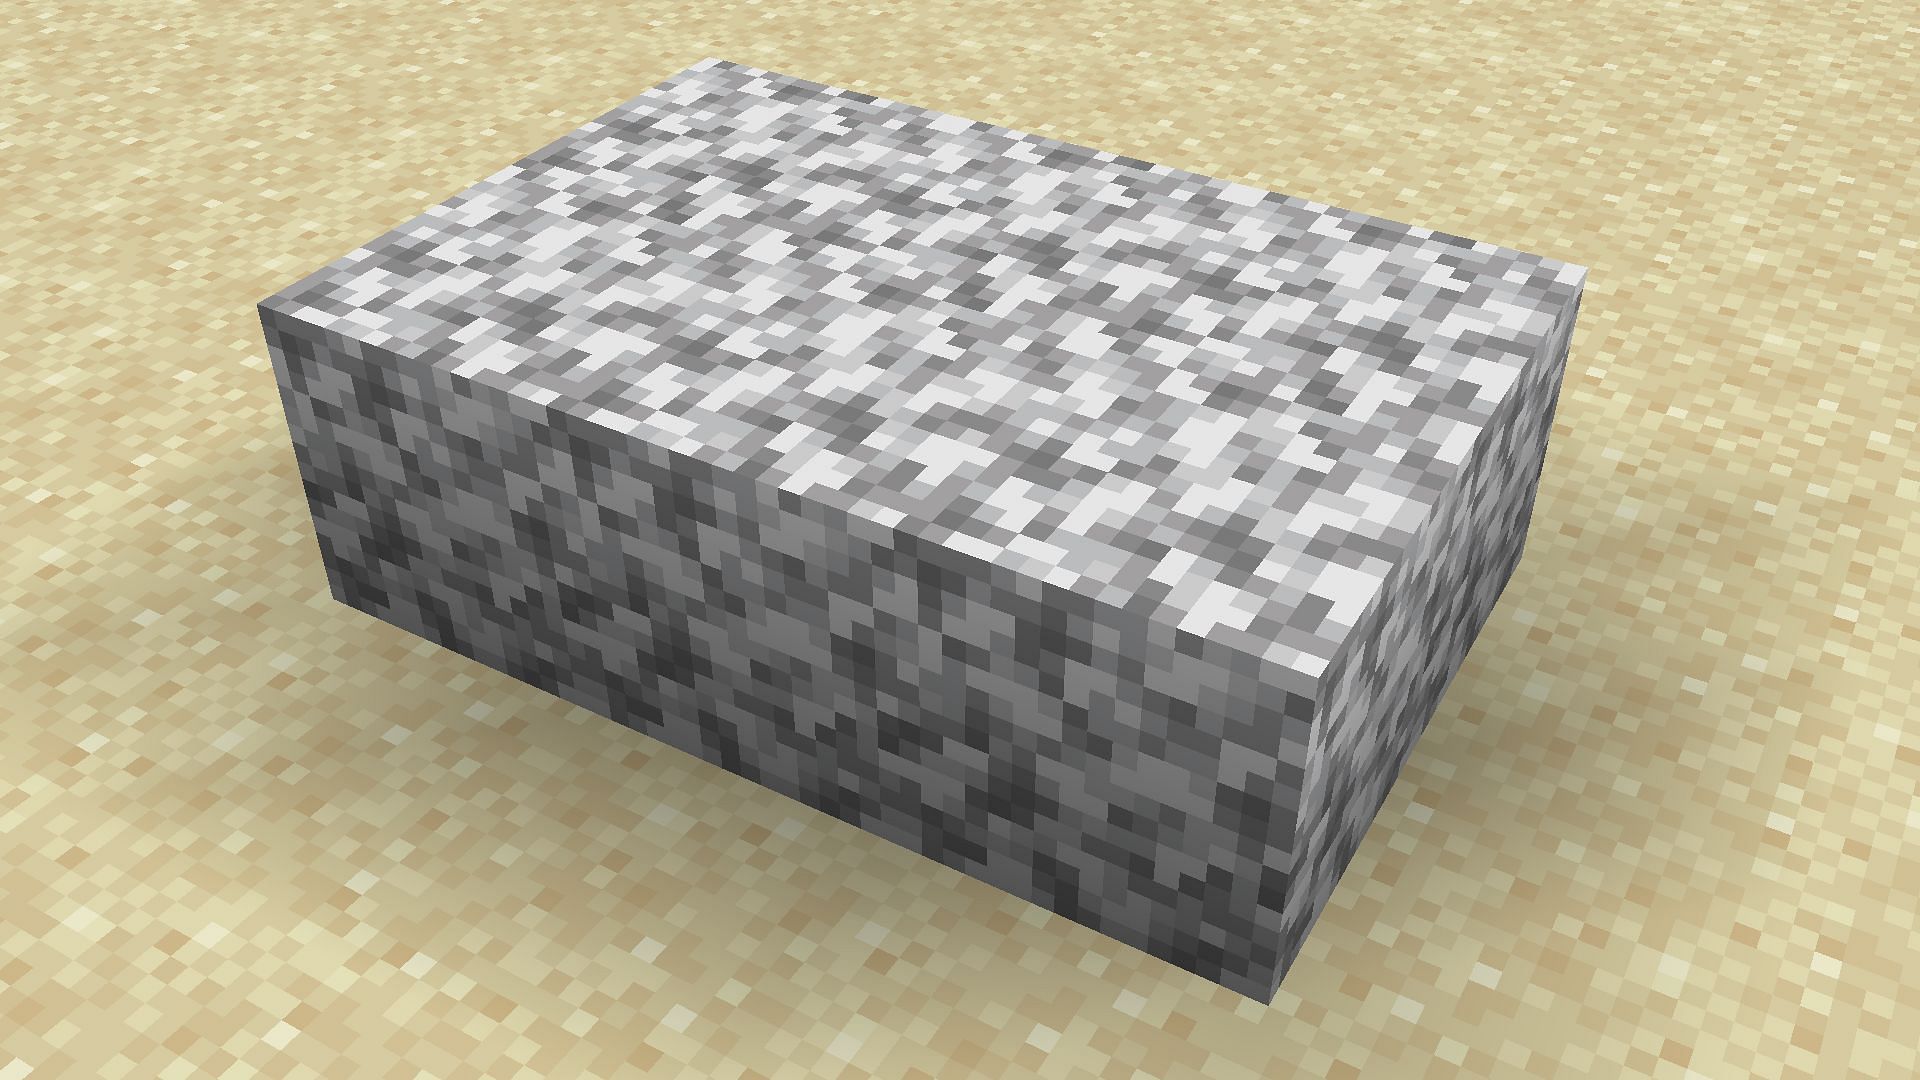 Diorite blocks in Minecraft (Image via Minecraft)